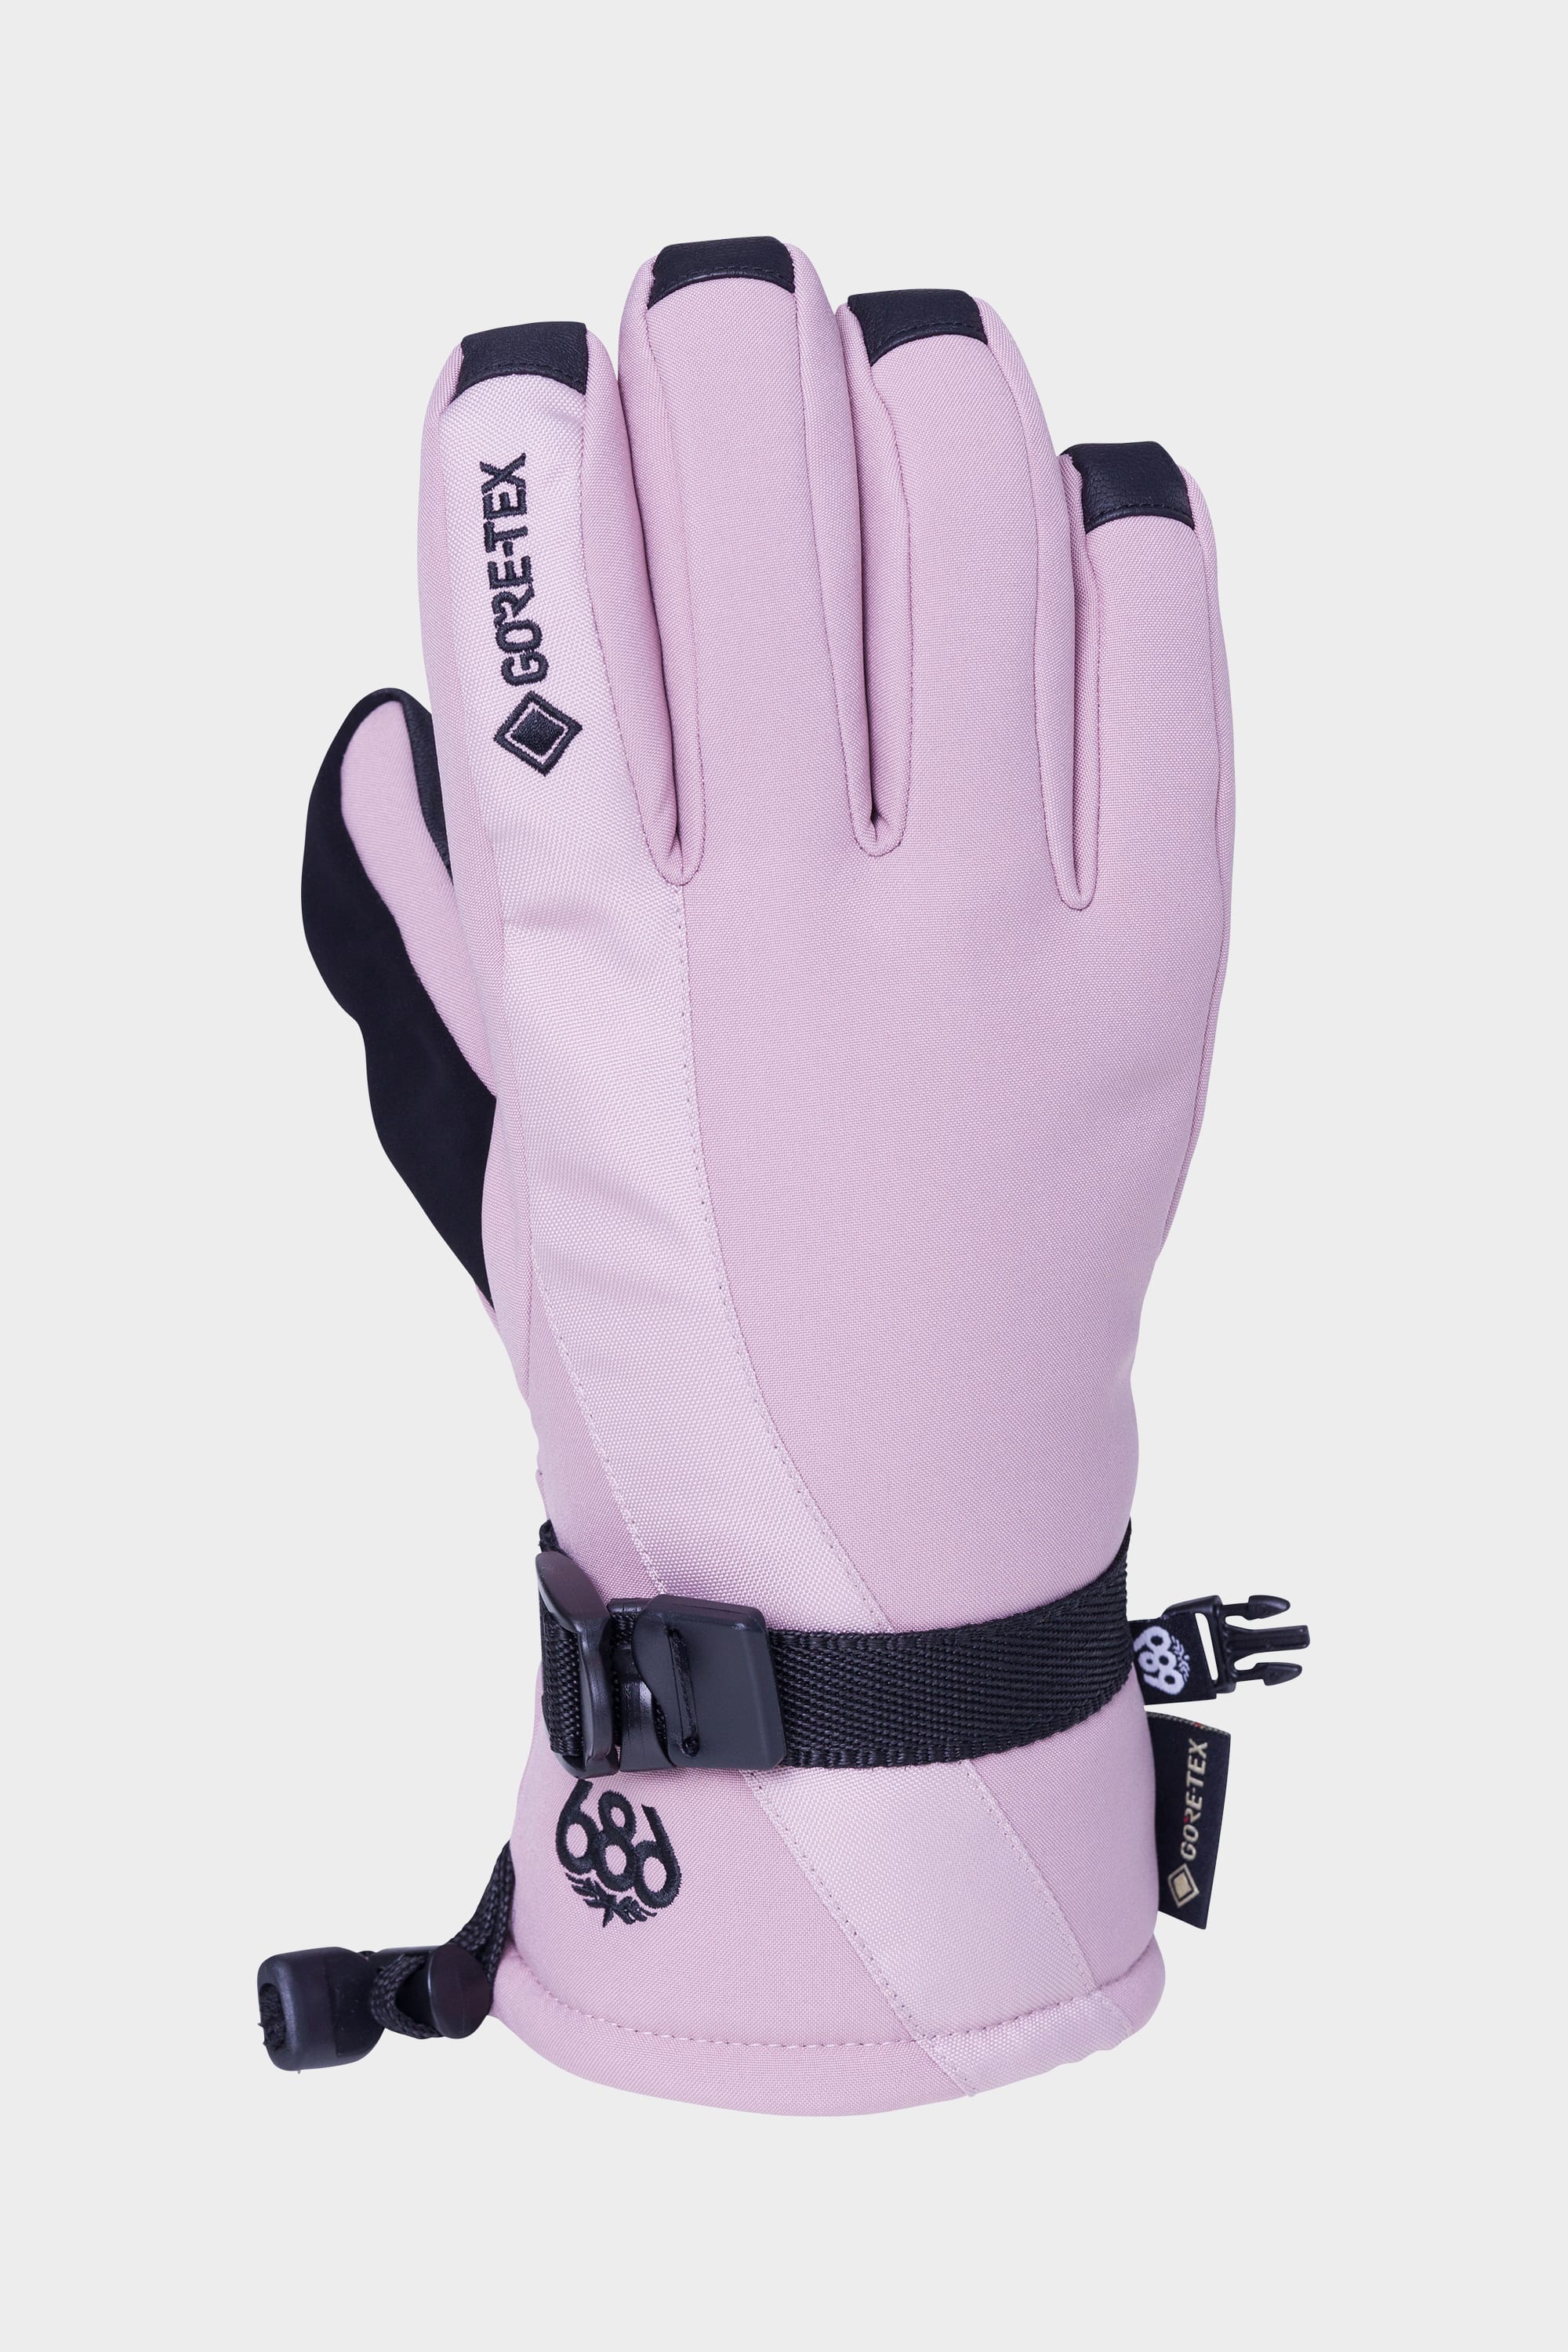 686 Women's GORE-TEX Linear Glove